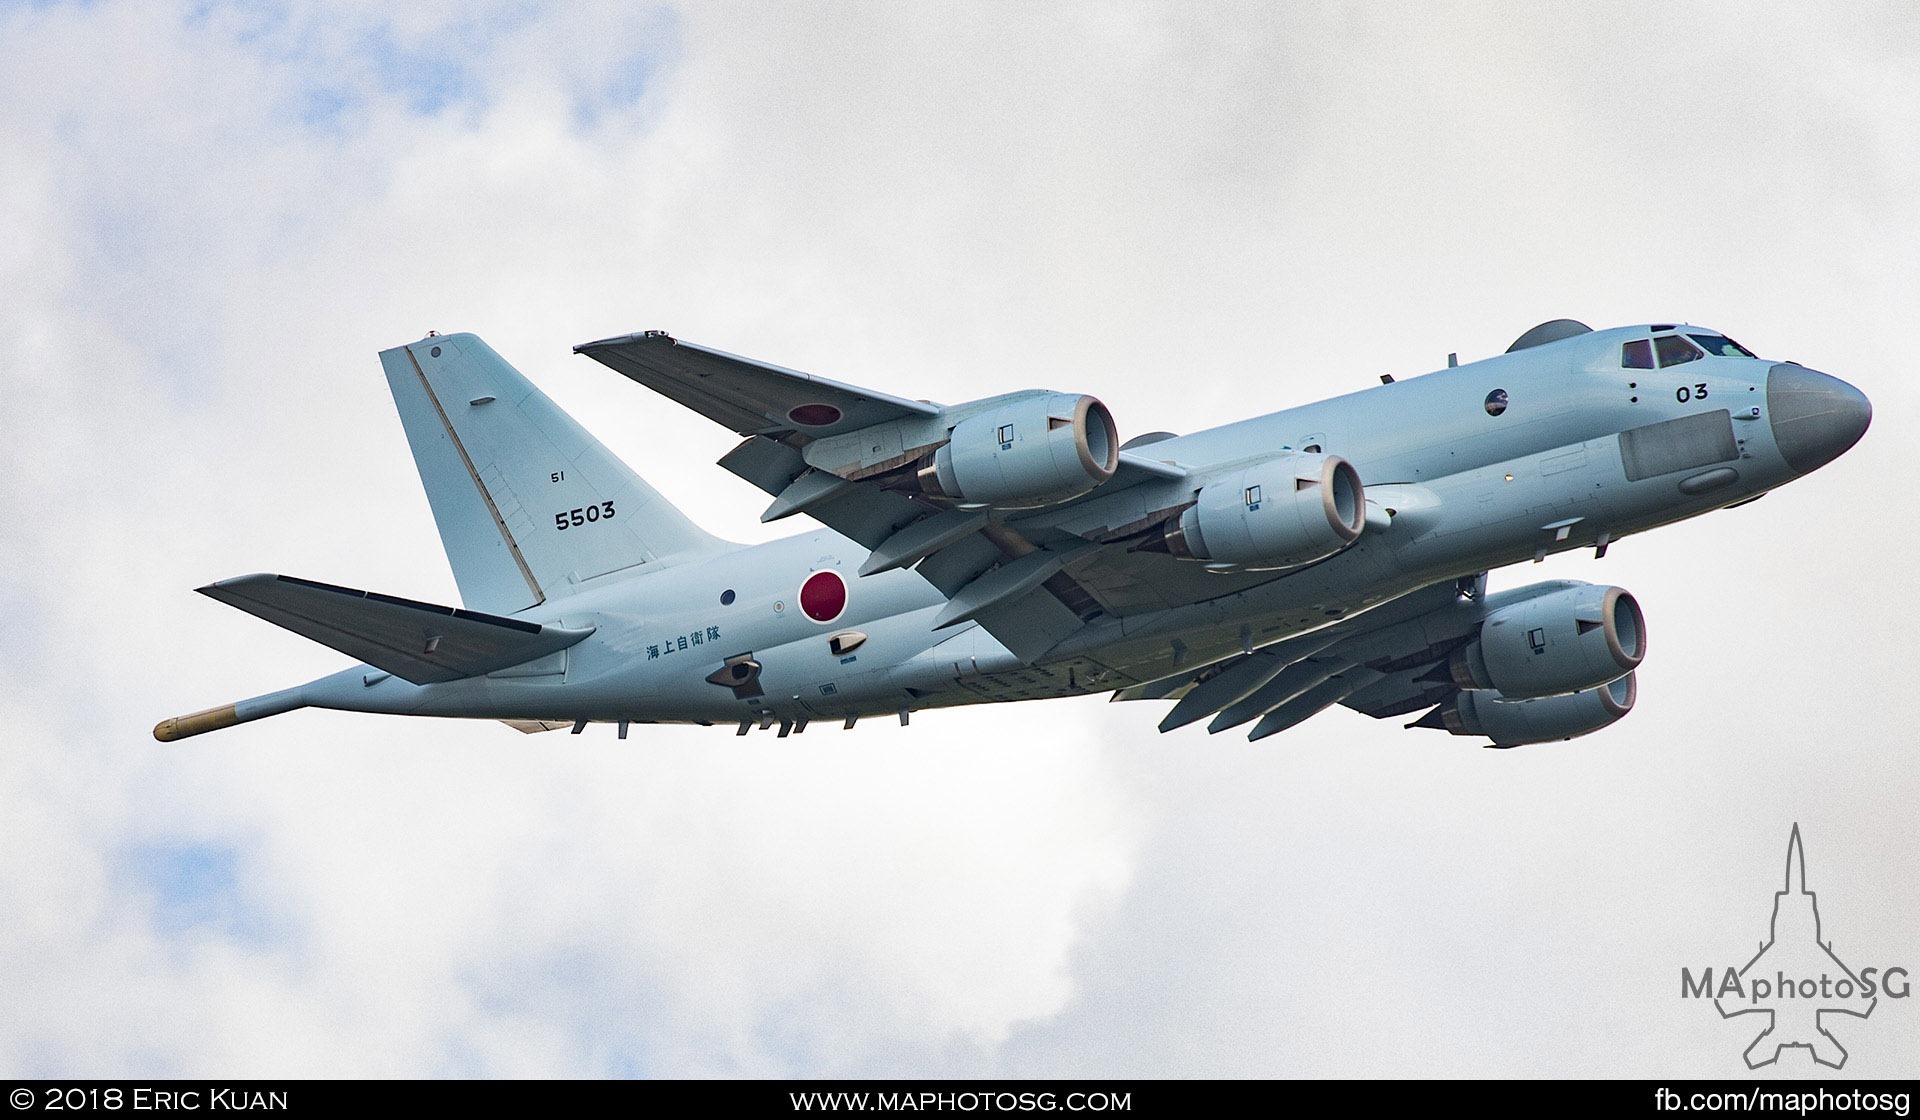 JMSDF Kawasaki P-1 (5503) takes off from Paya Lebar Air Base headed for ILA2018 Berlin Air Show.